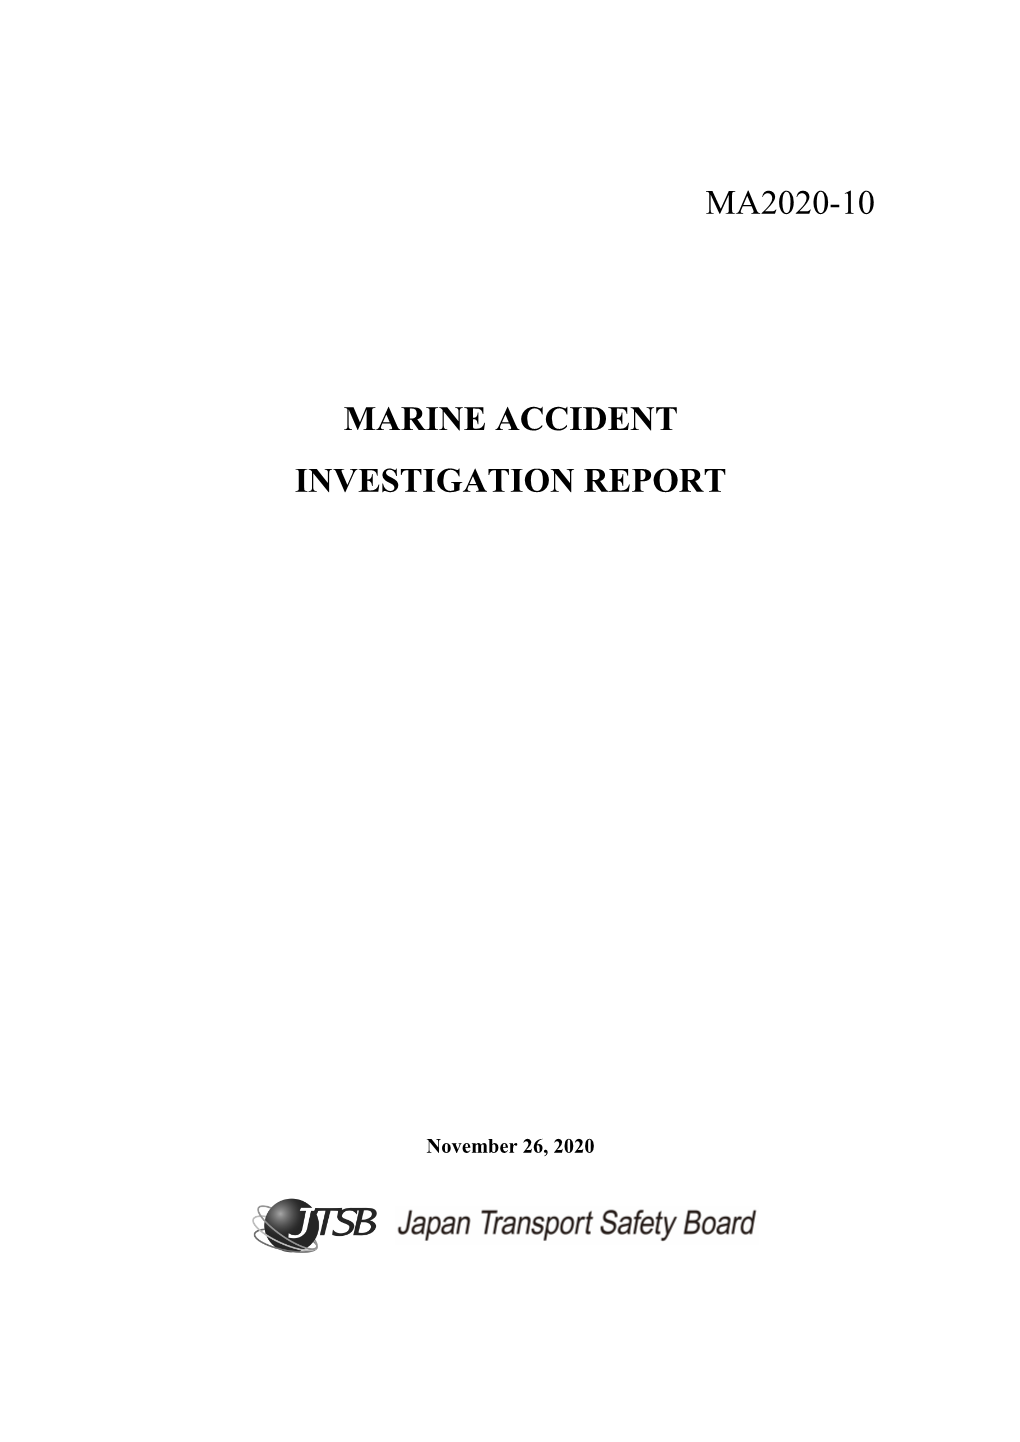 Ma2020-10 Marine Accident Investigation Report